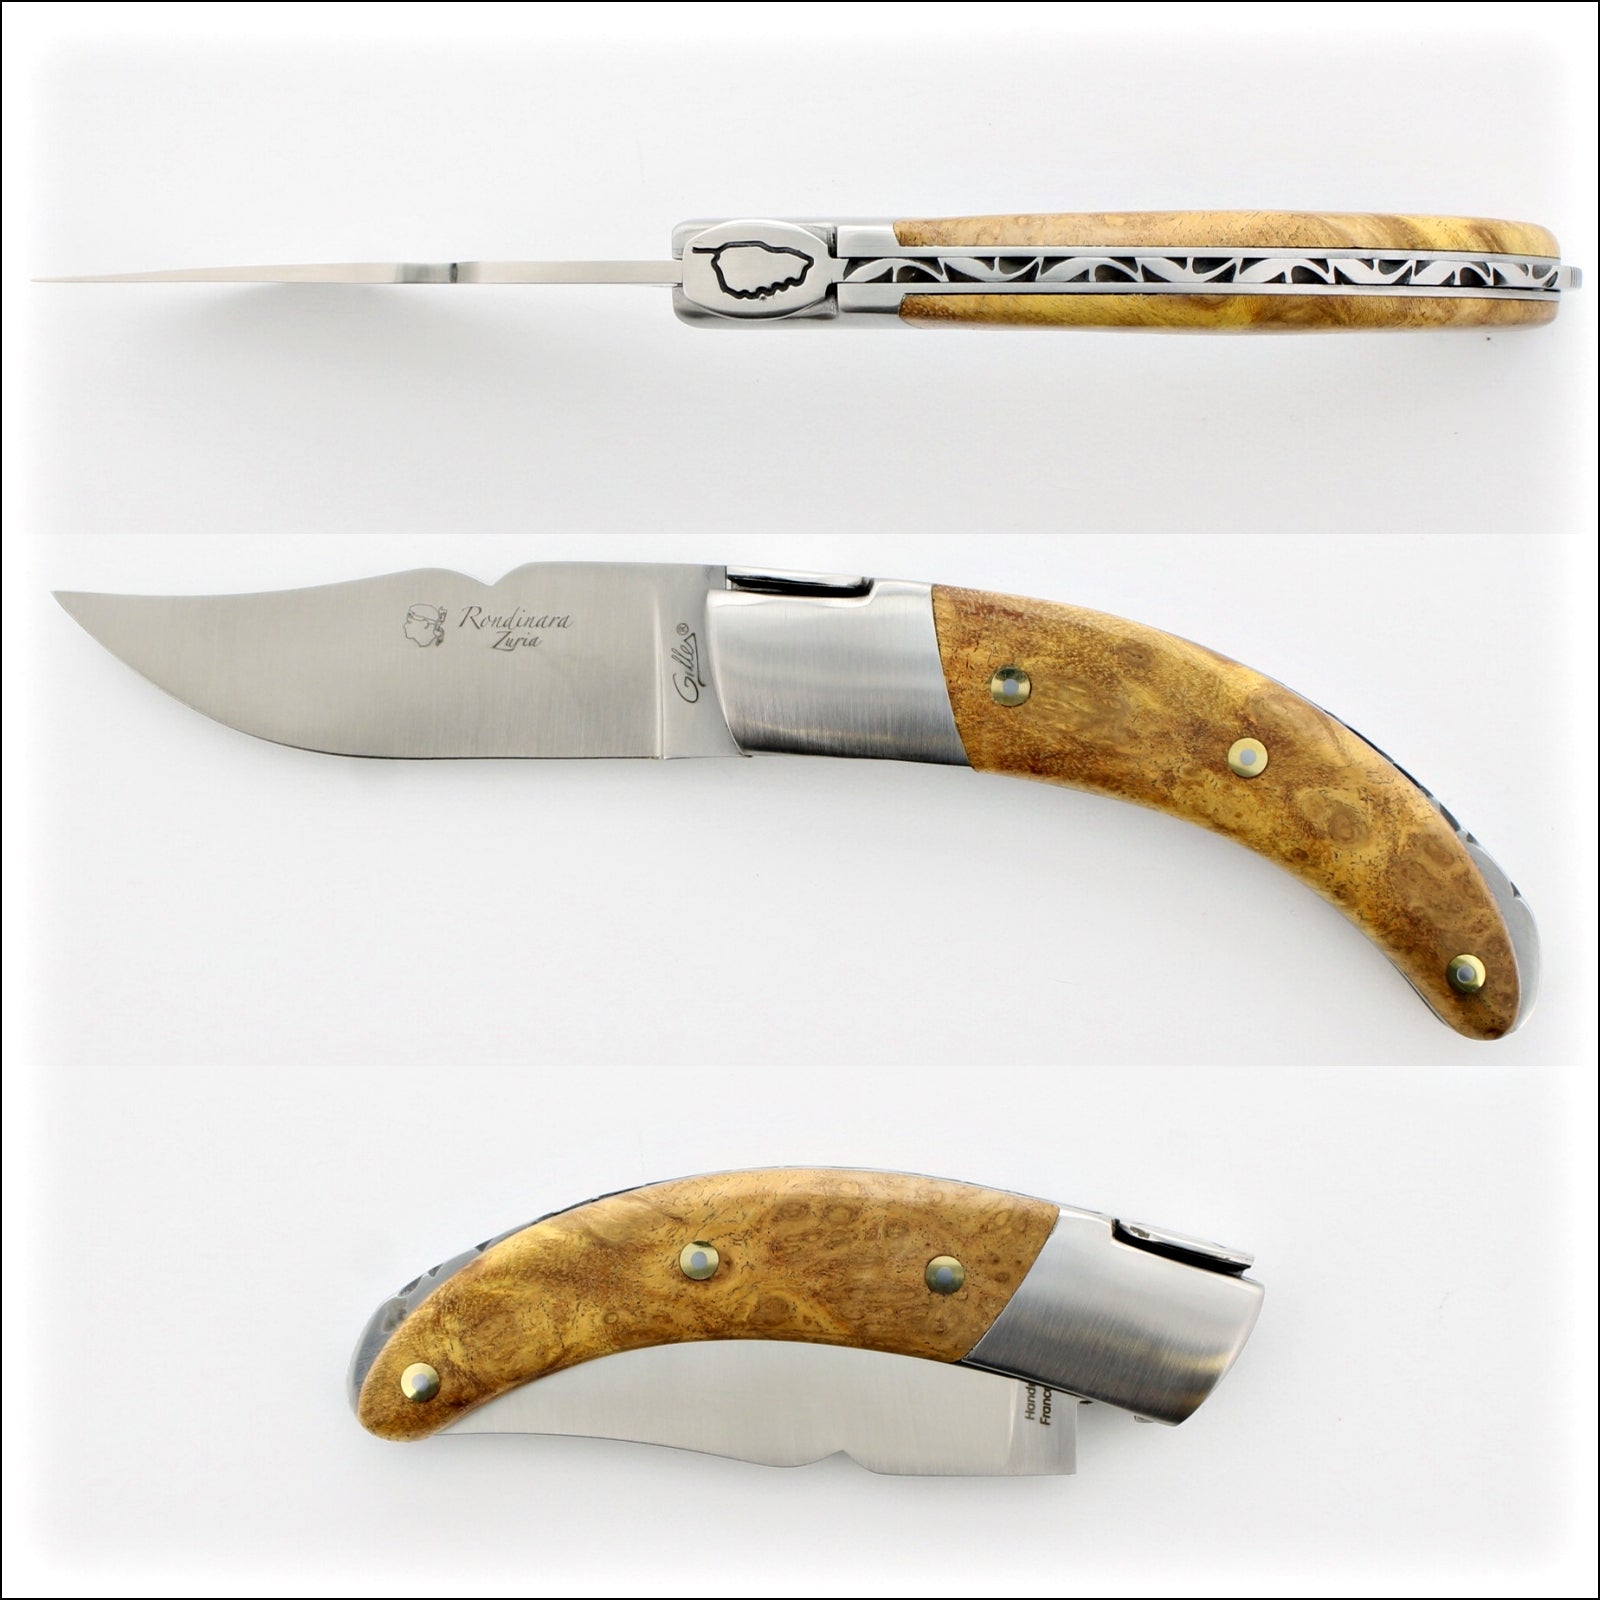 Corsican Rondinara Folding Knife - Amboyna Burl Handle